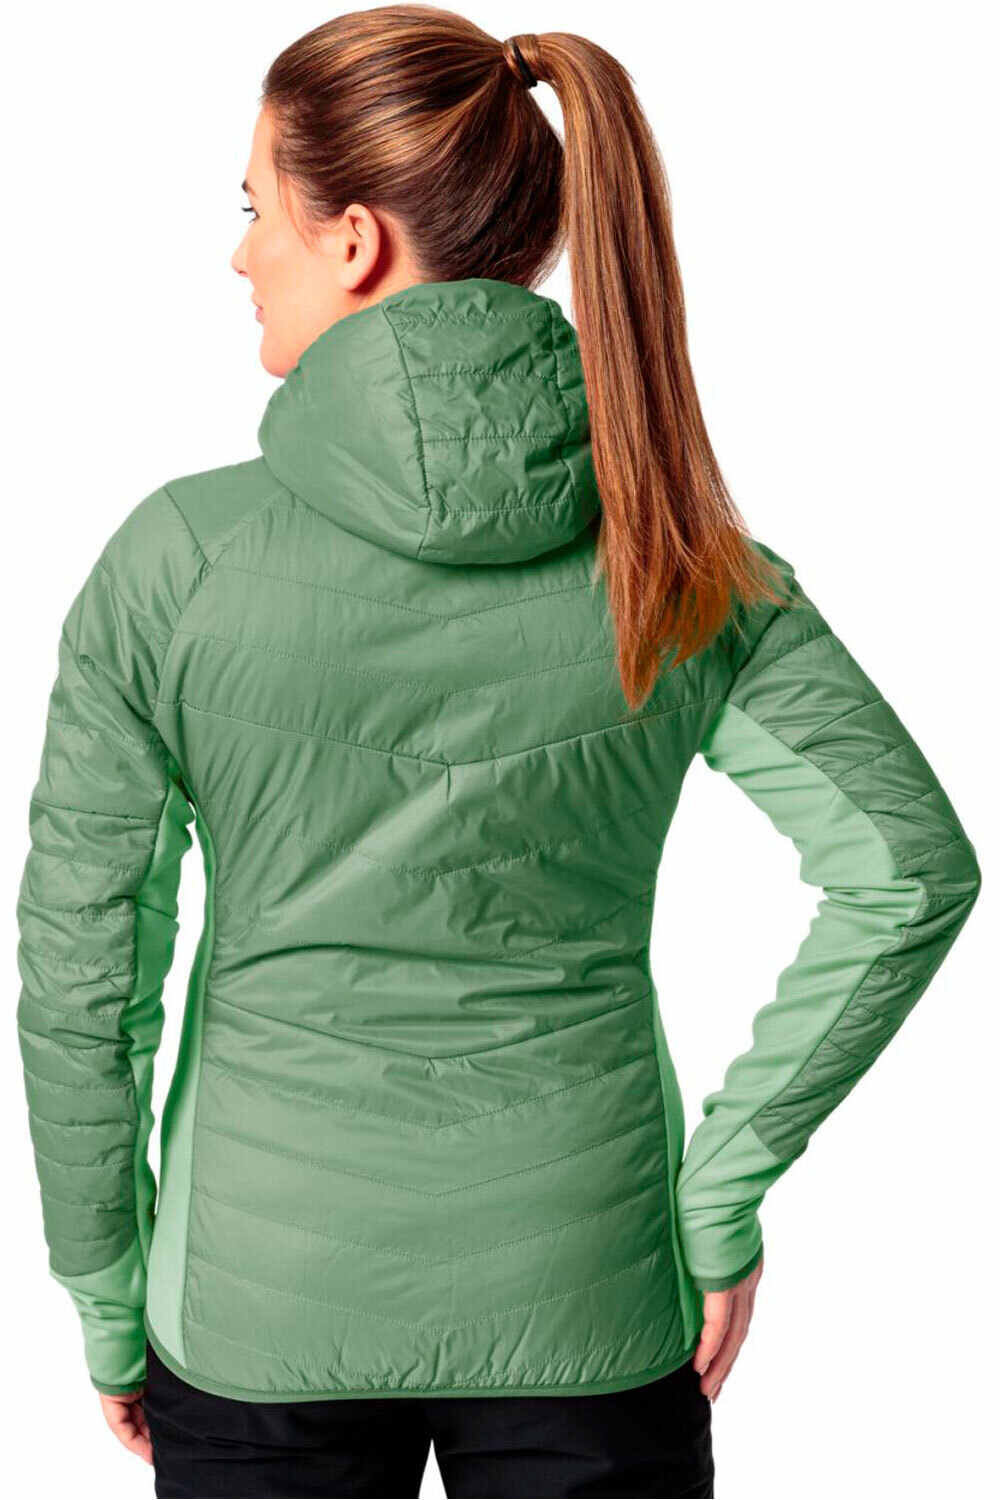 Vaude chaqueta outdoor mujer Women's Sesvenna Jacket IV vista trasera